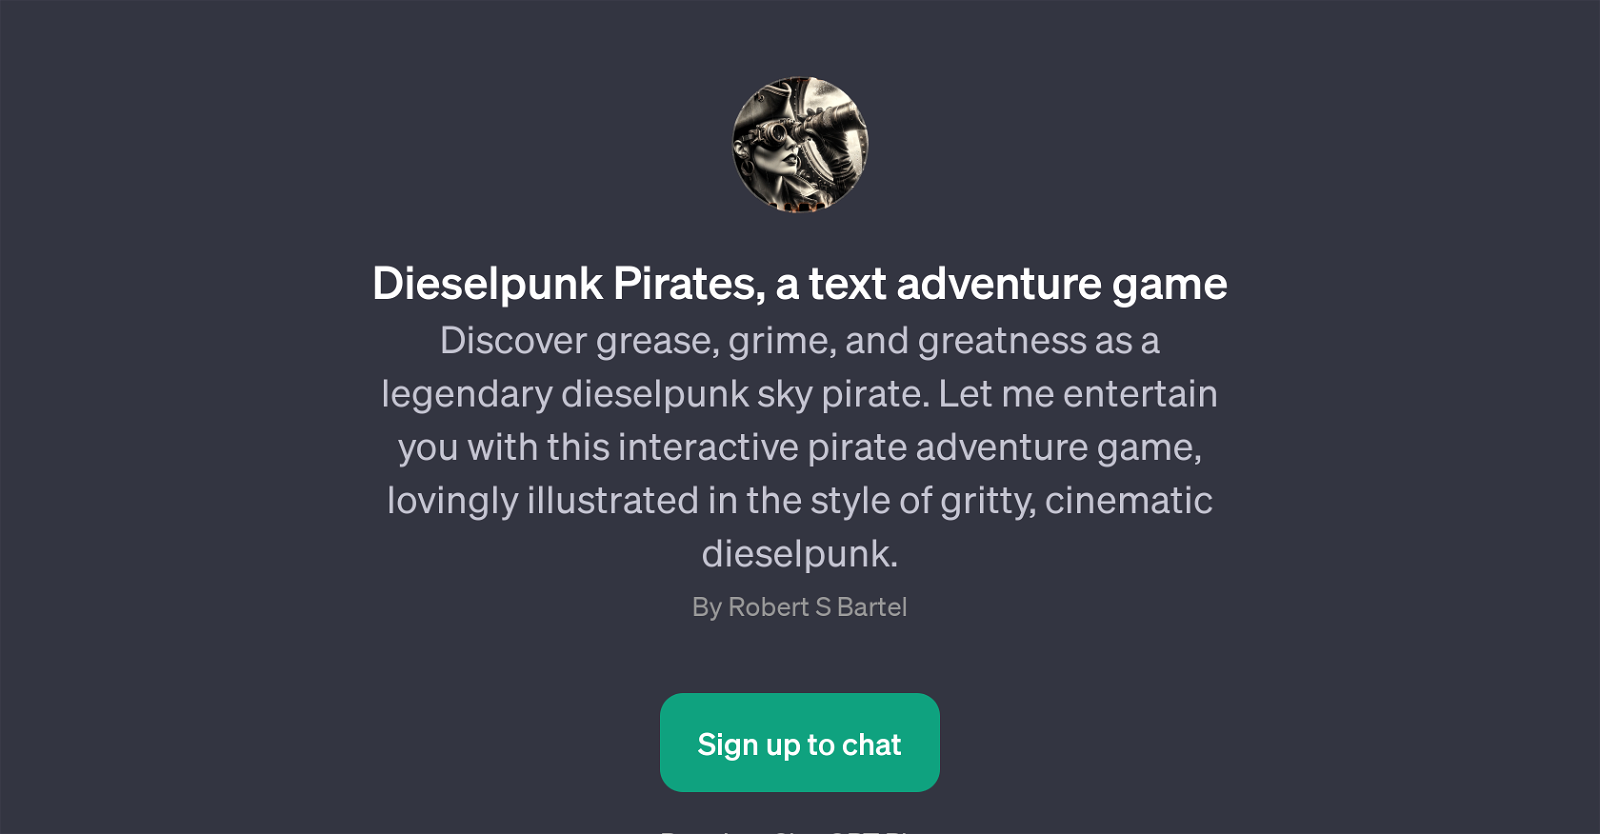 Dieselpunk Pirates, a text adventure game website